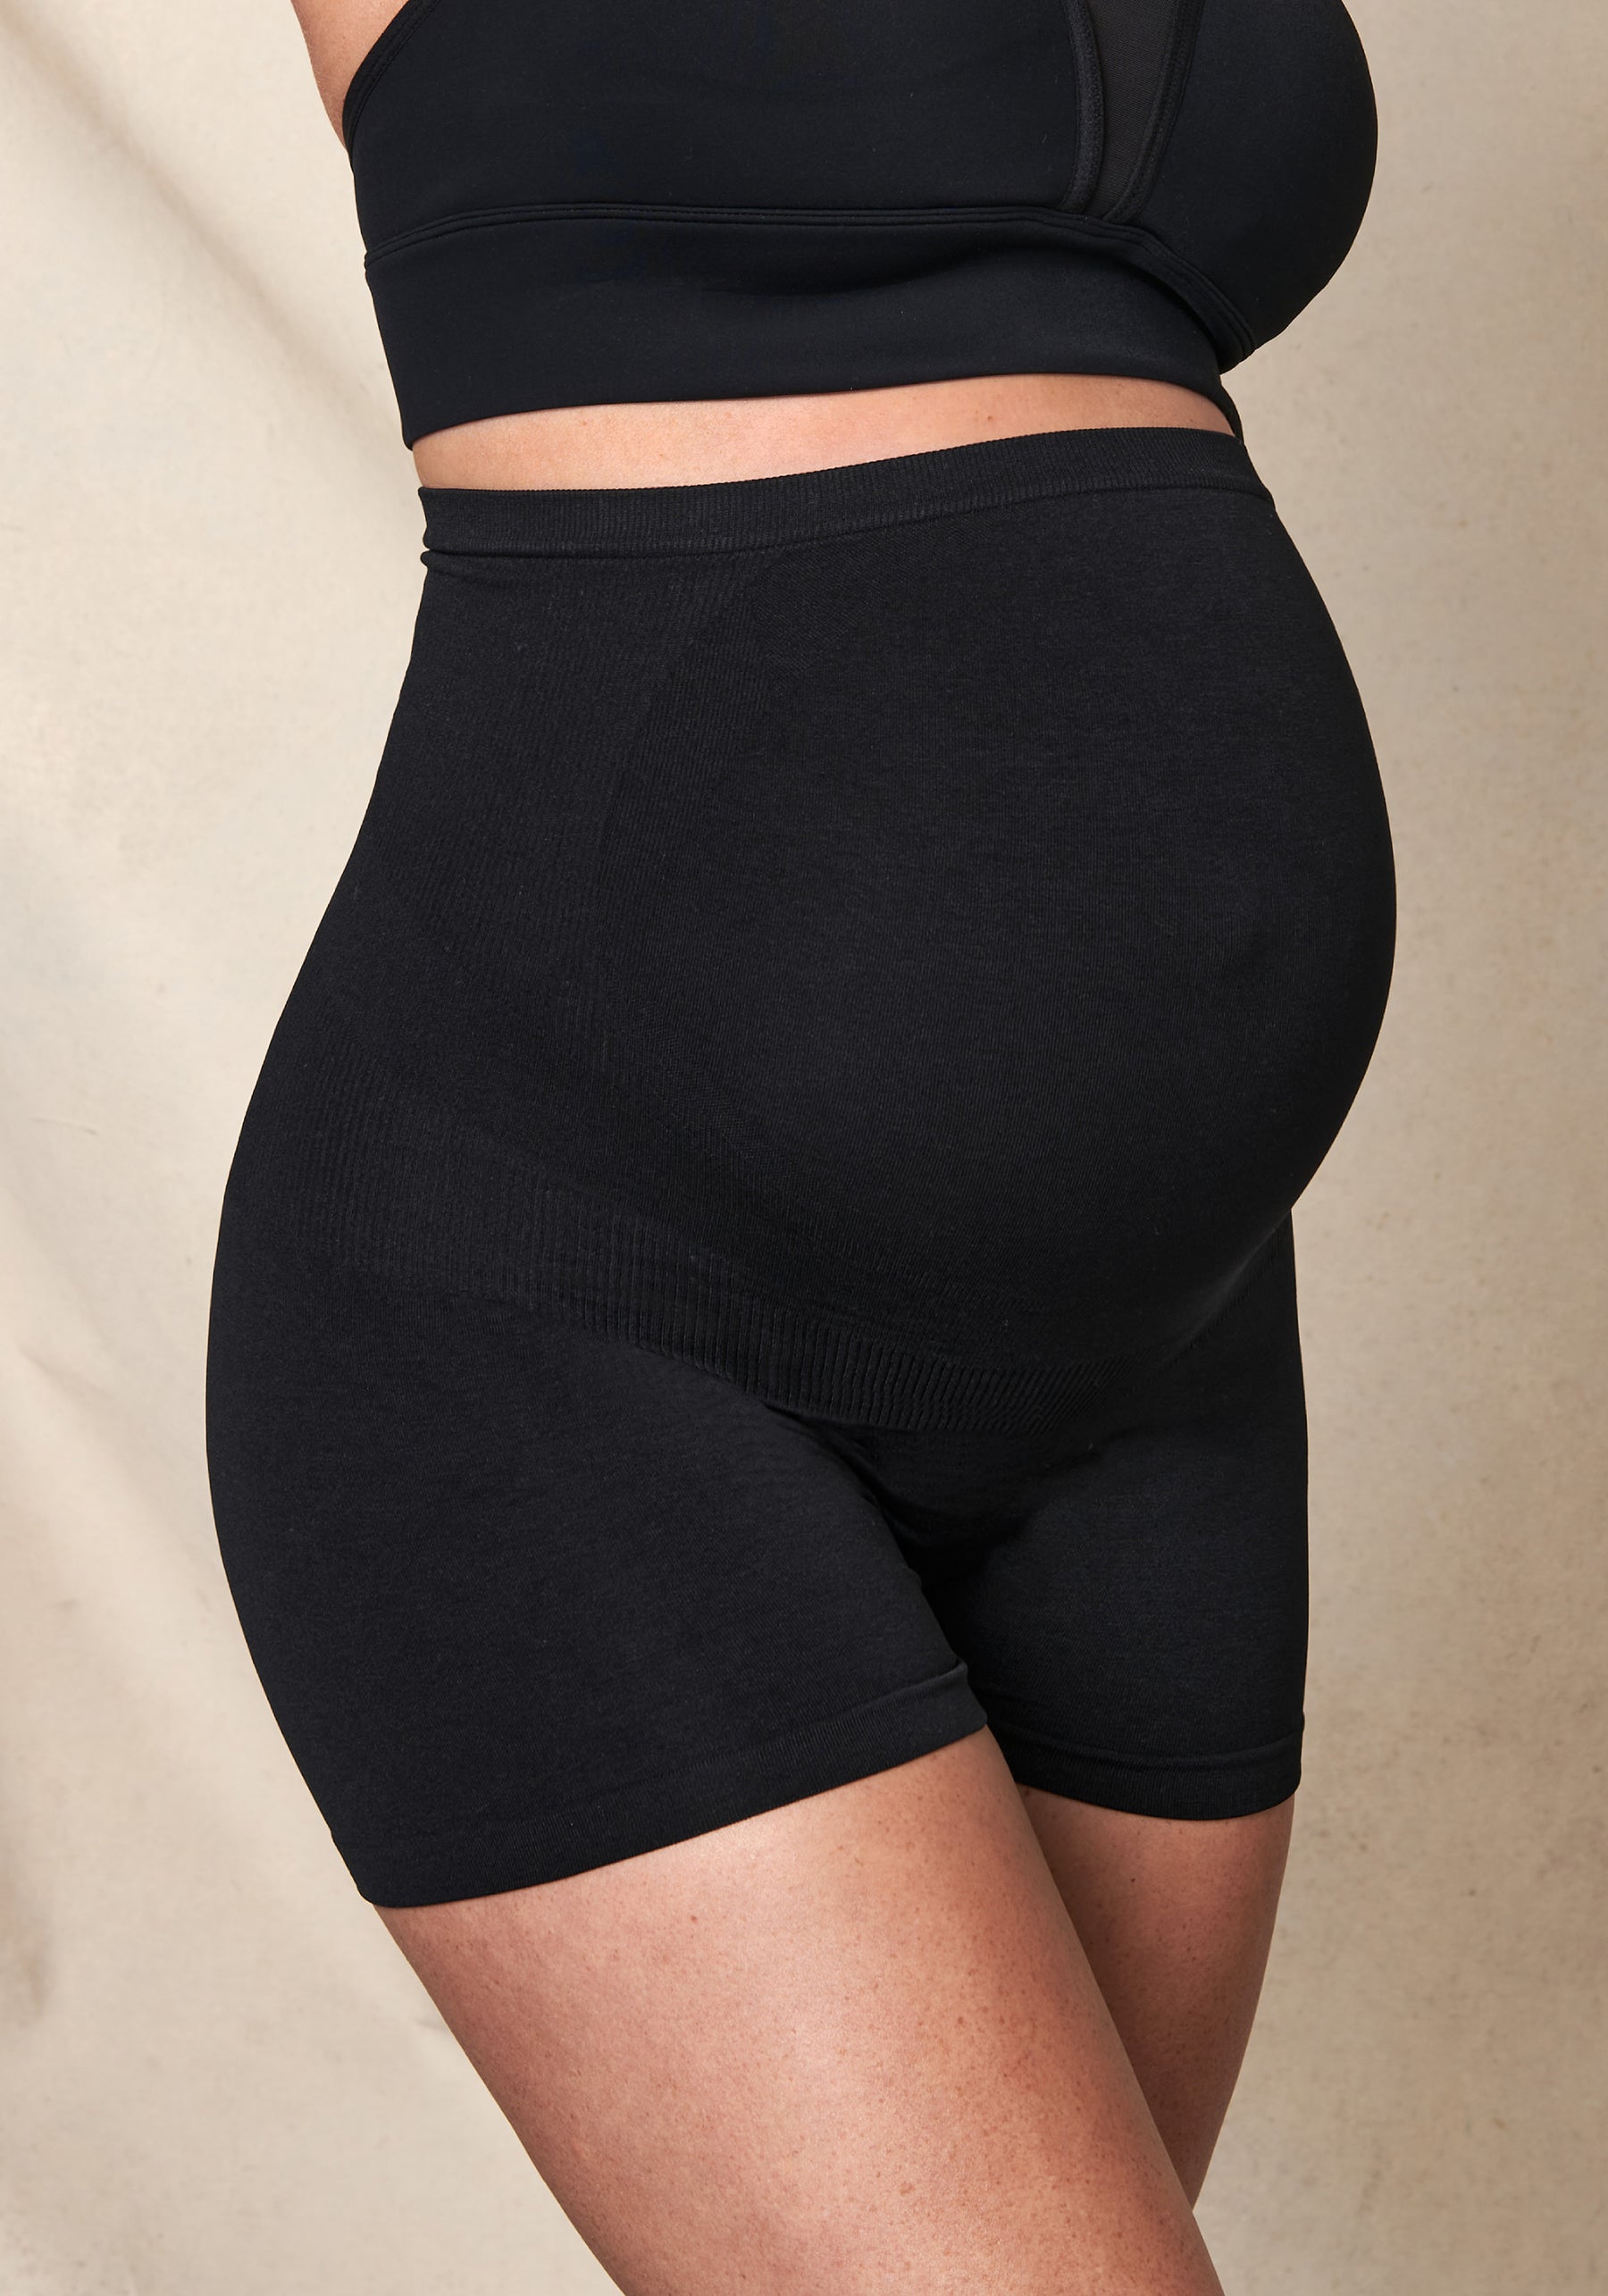 Maternity boyshort Panties Set – Black, Grey & Brown